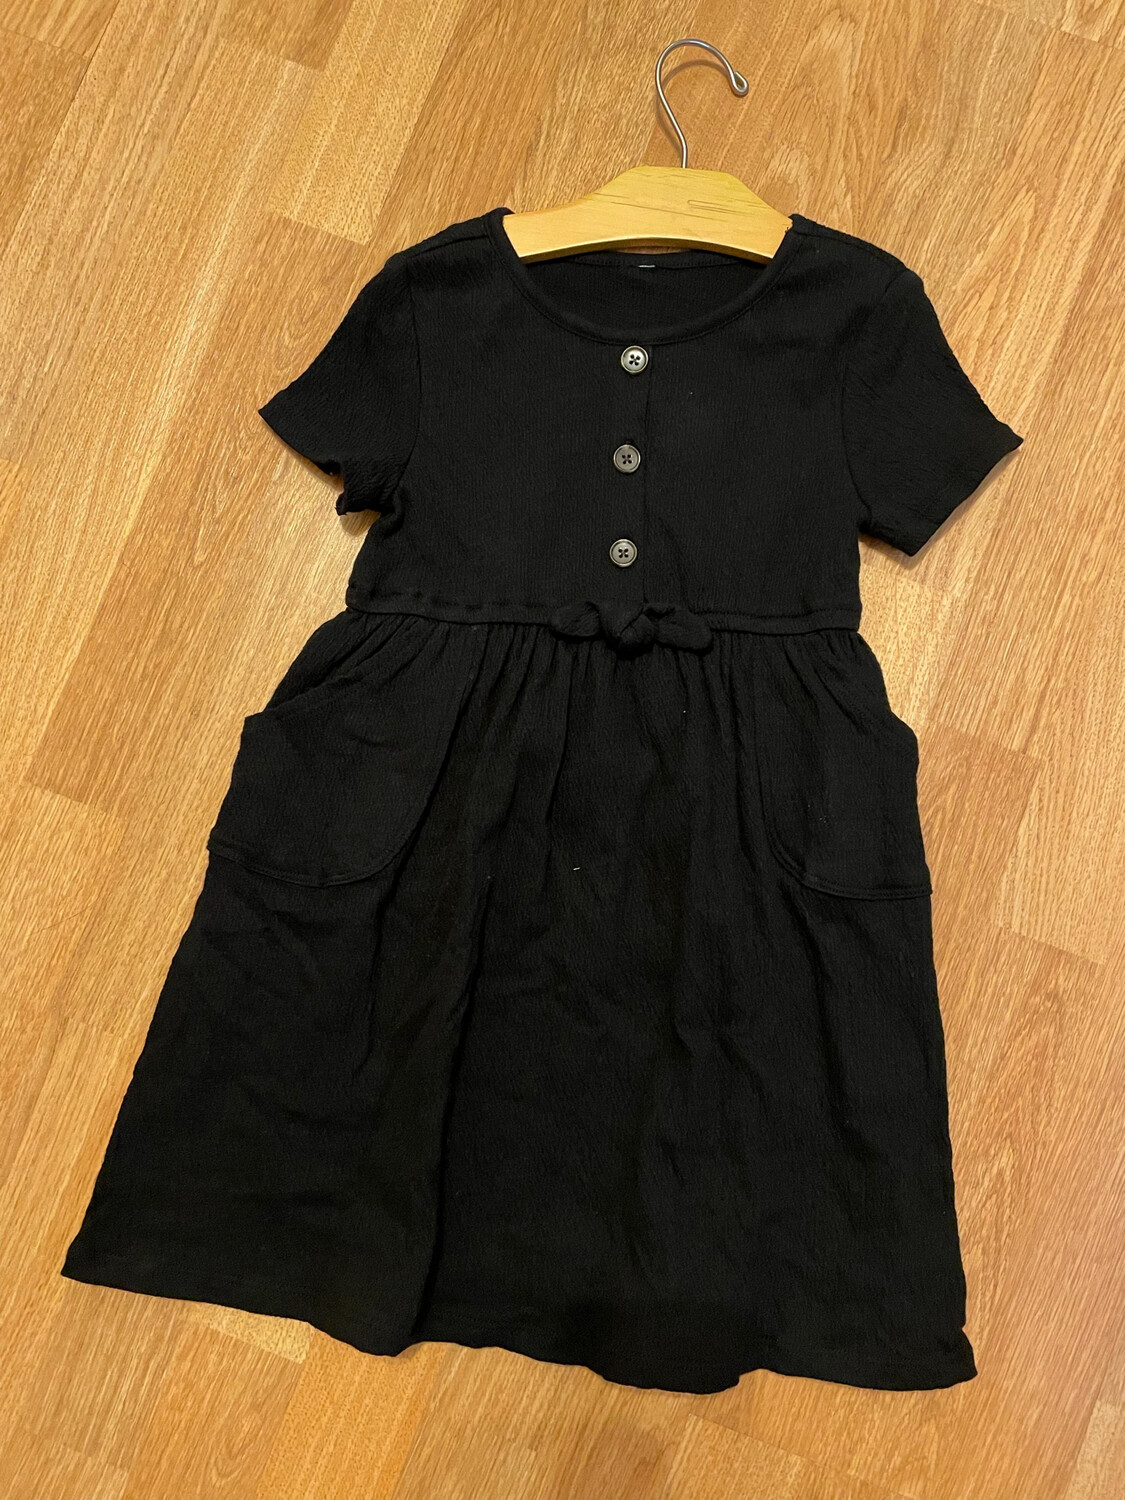 Black Dress With Pockets